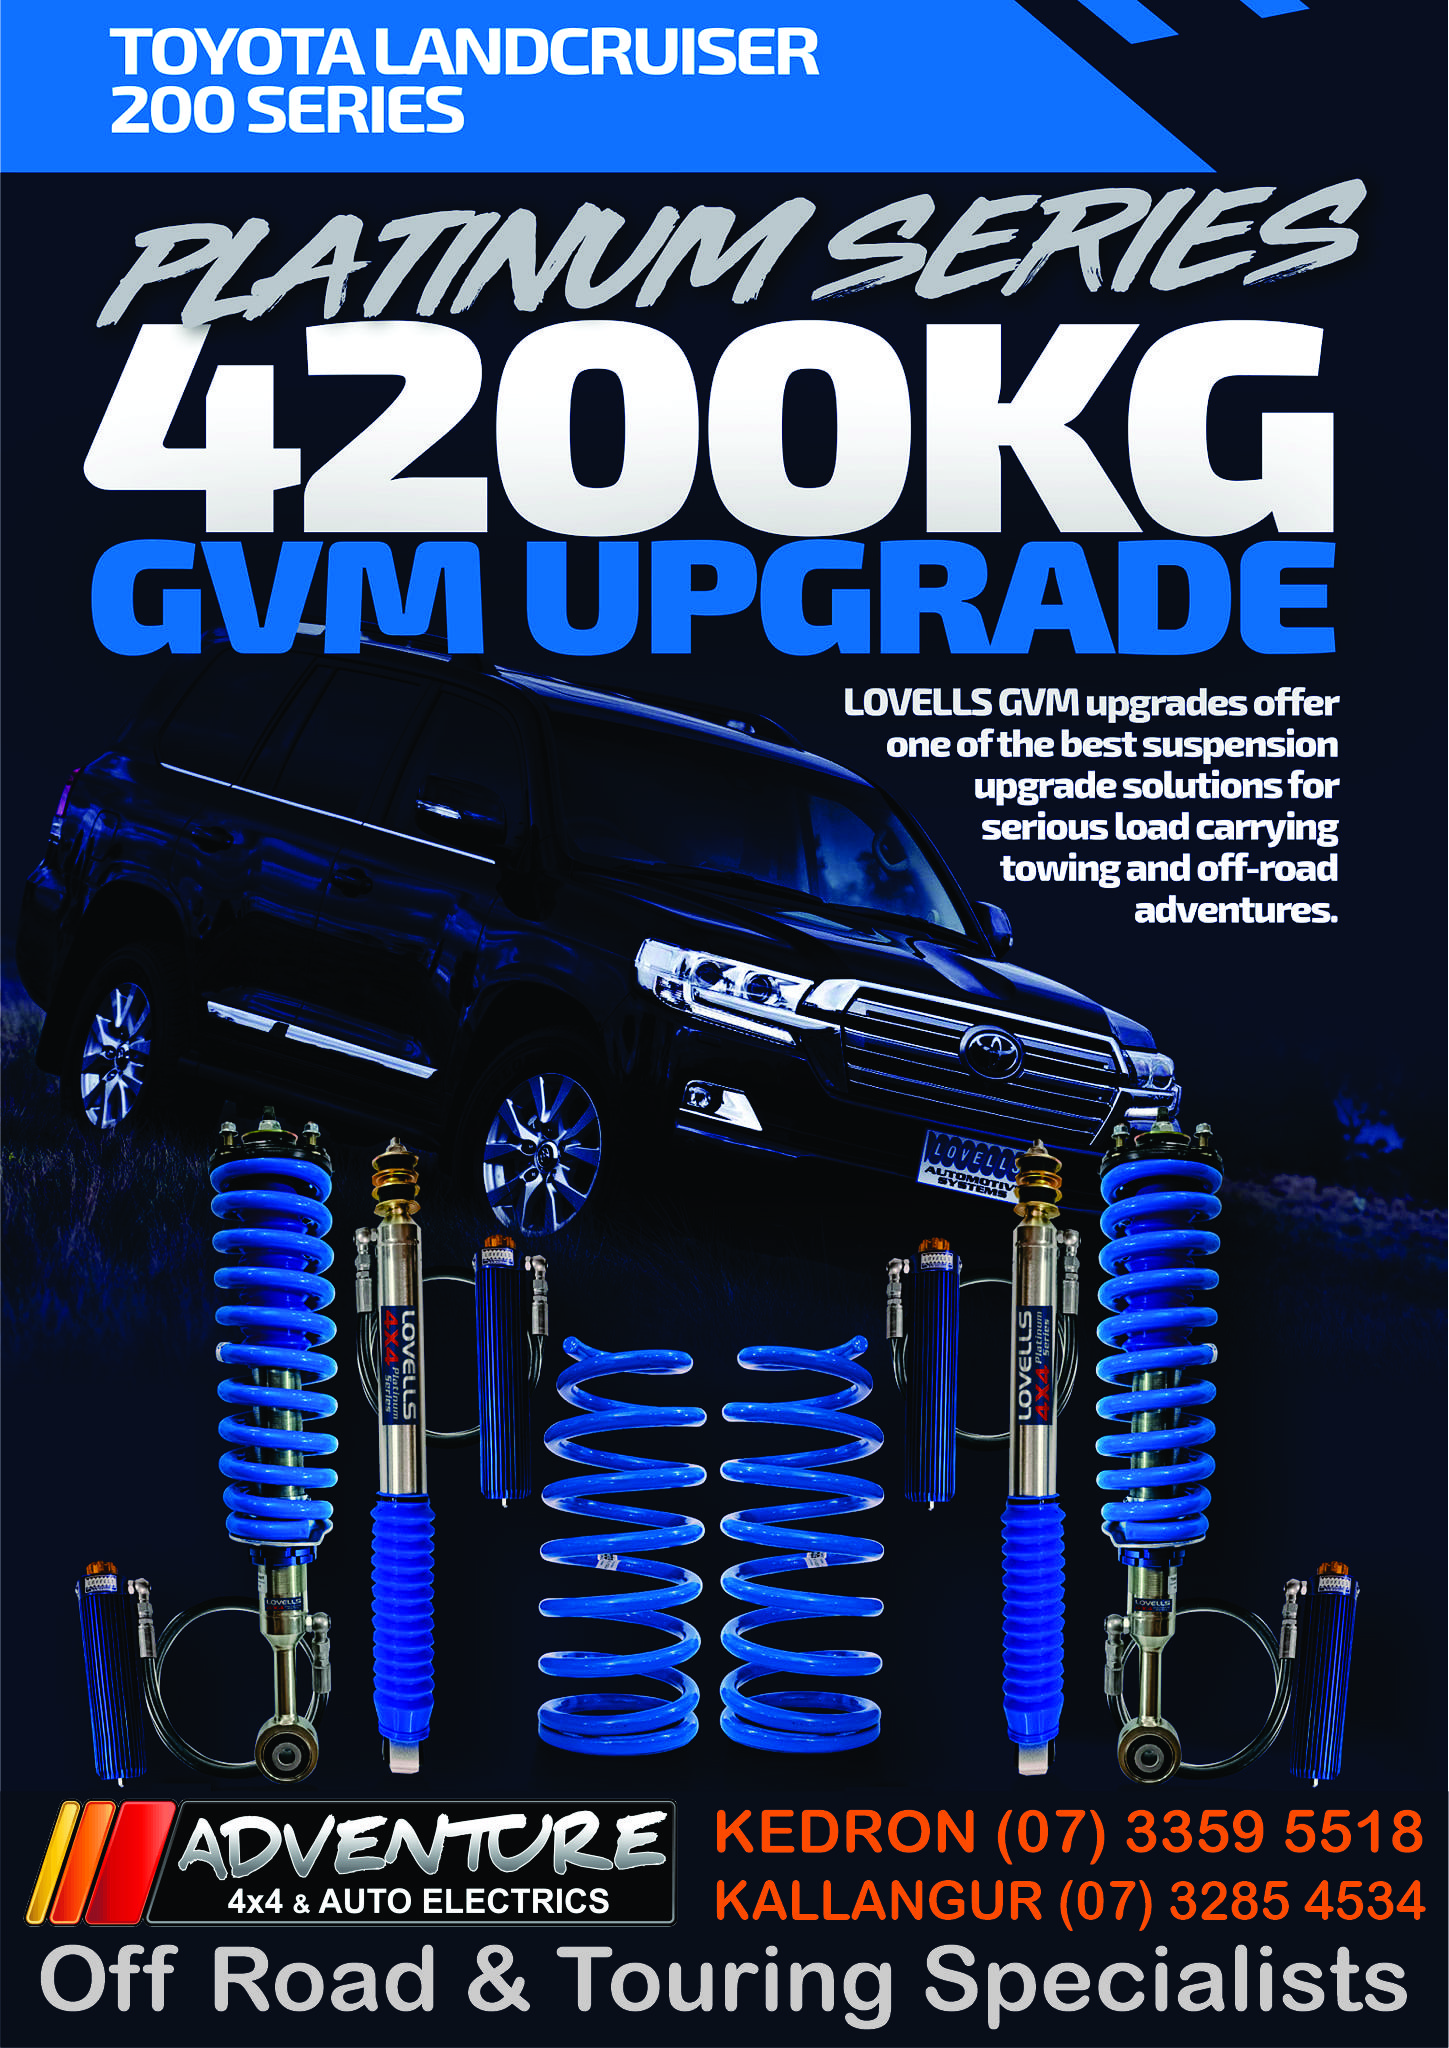 Toyota Landcruiser 200 Series Wagon GVM upgrade to 4200kg